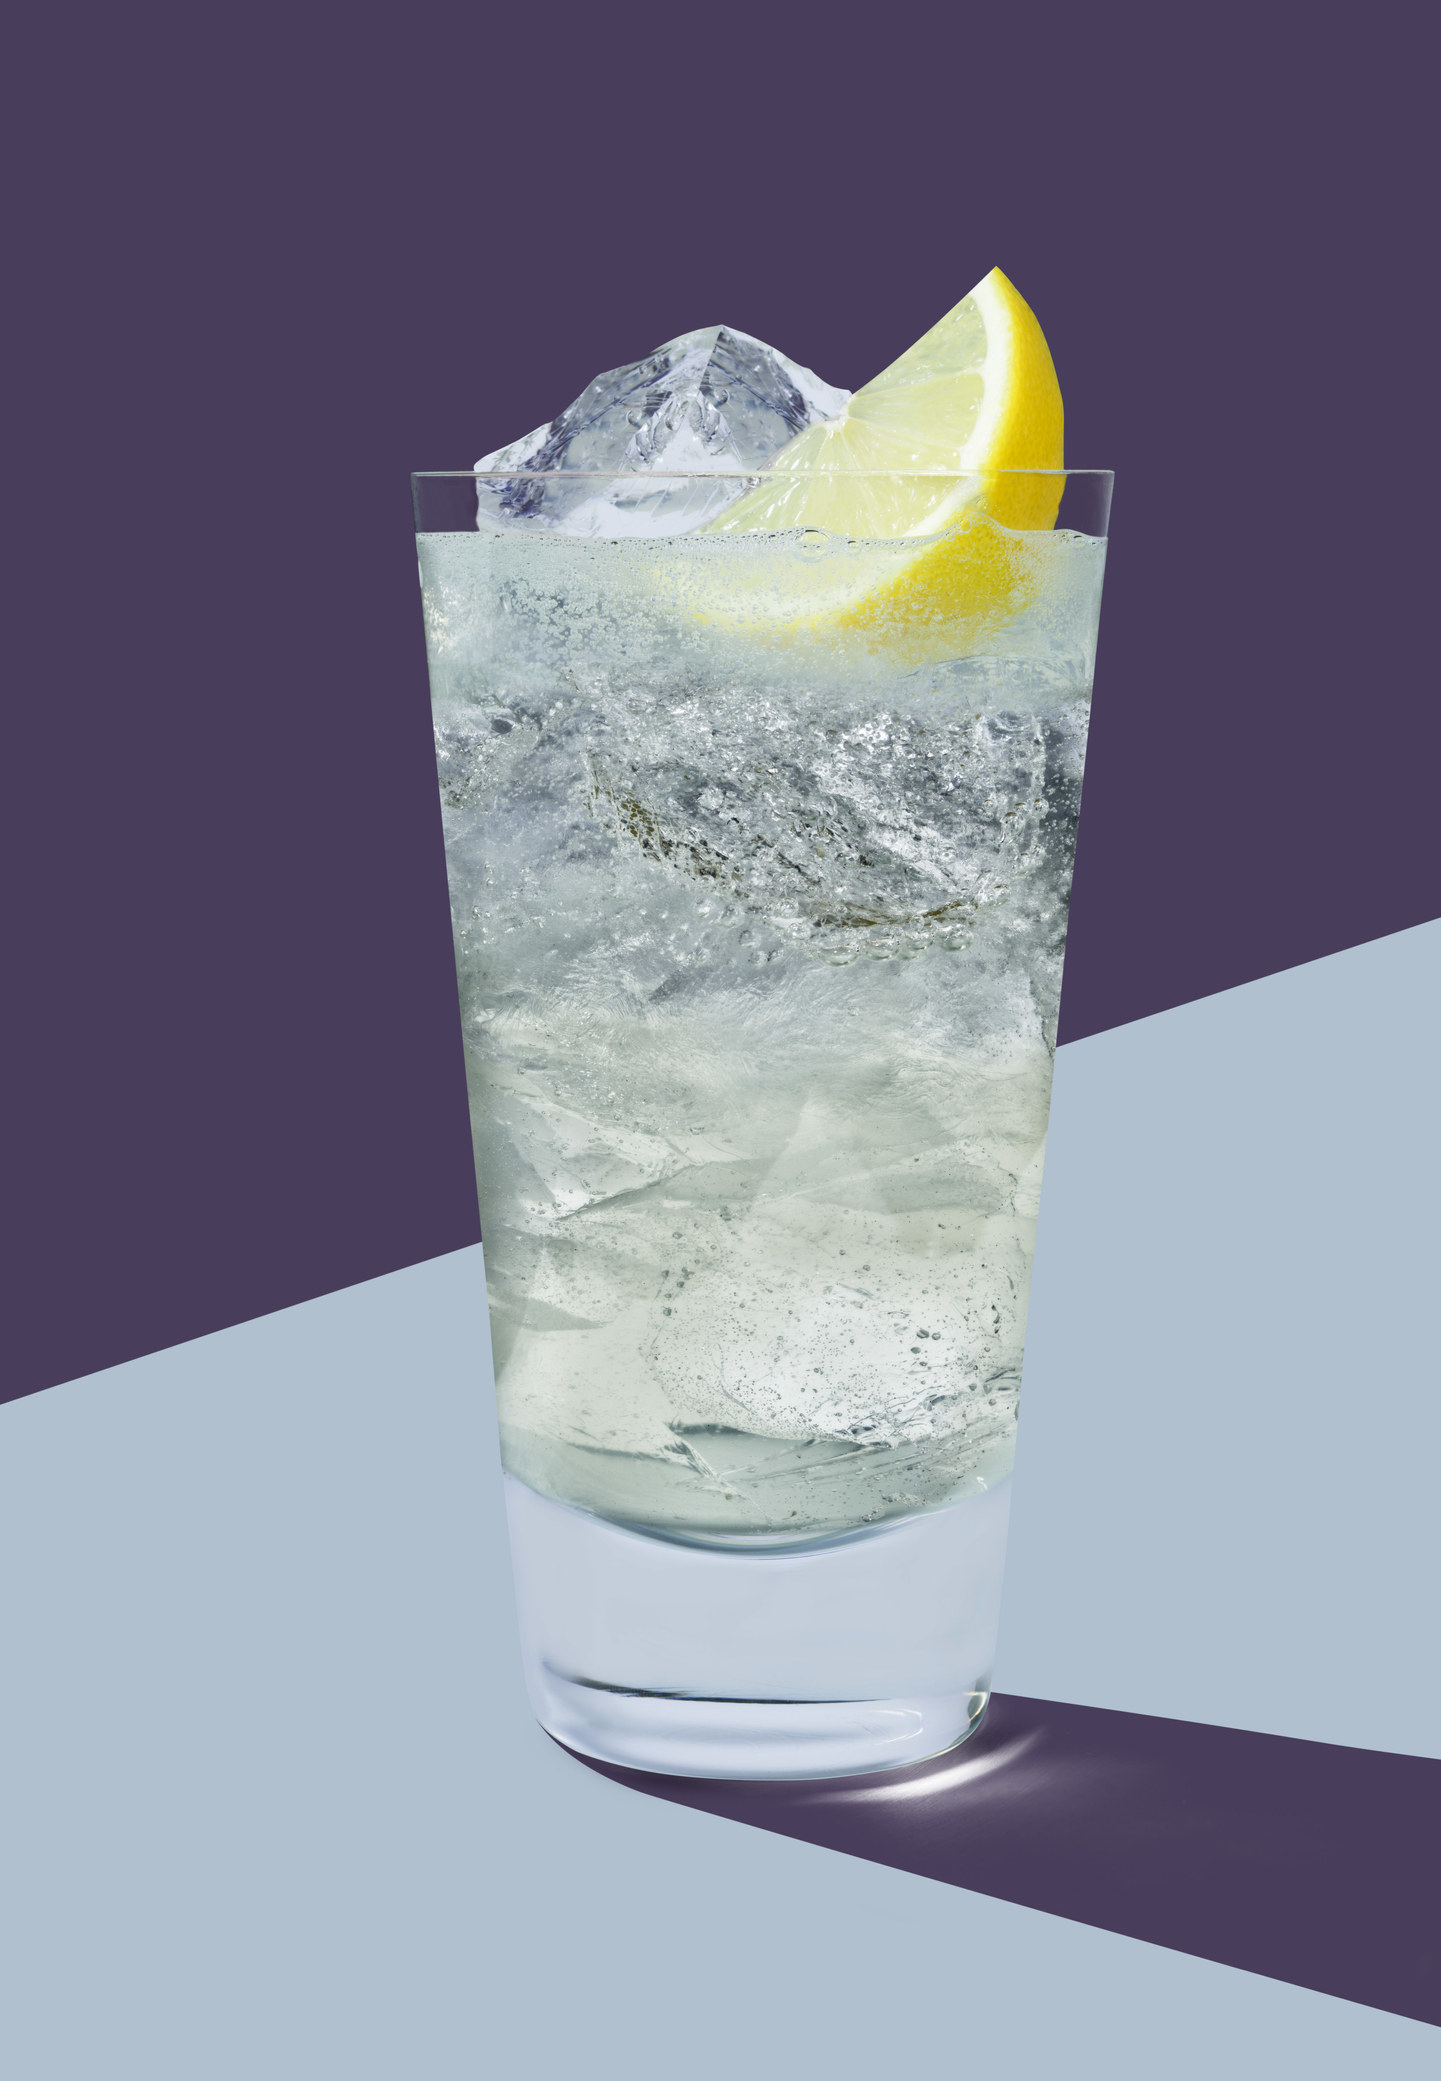 lemon in a glass of water